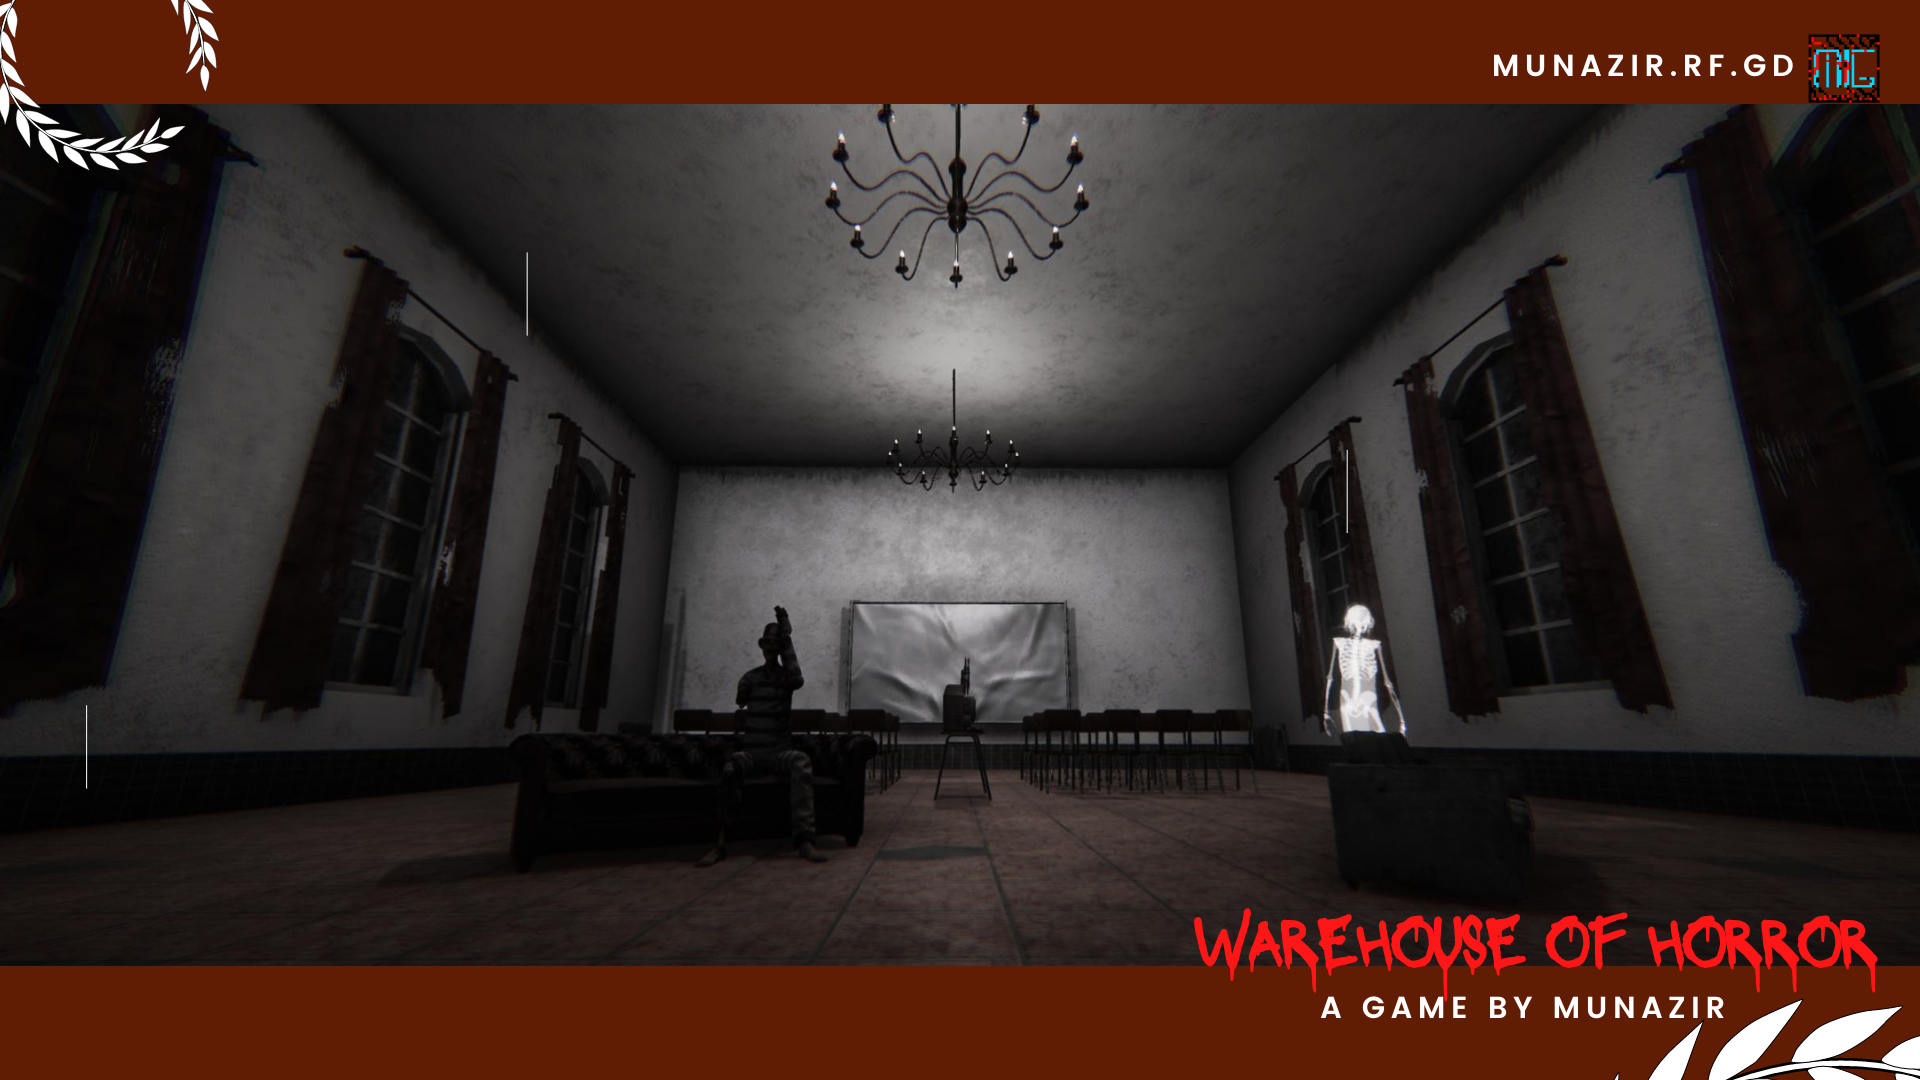 Warehouse of horror screenshot game